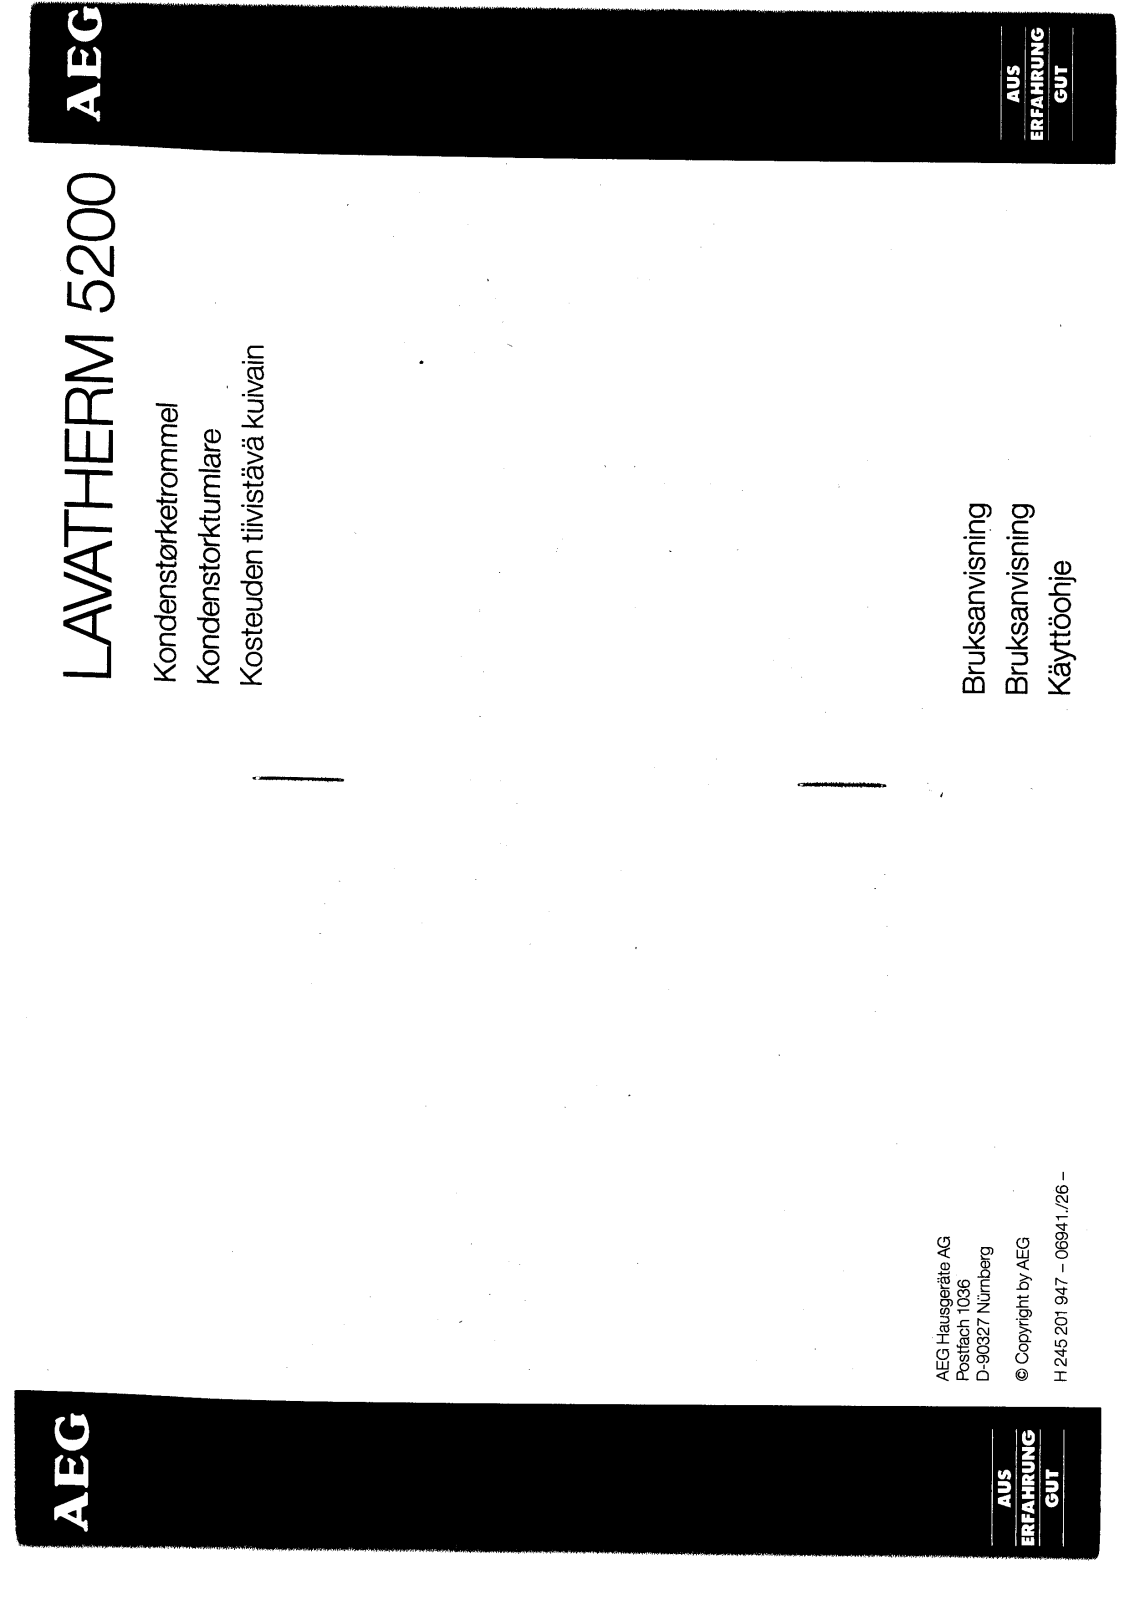 AEG LAVATHERM 5200 User Manual